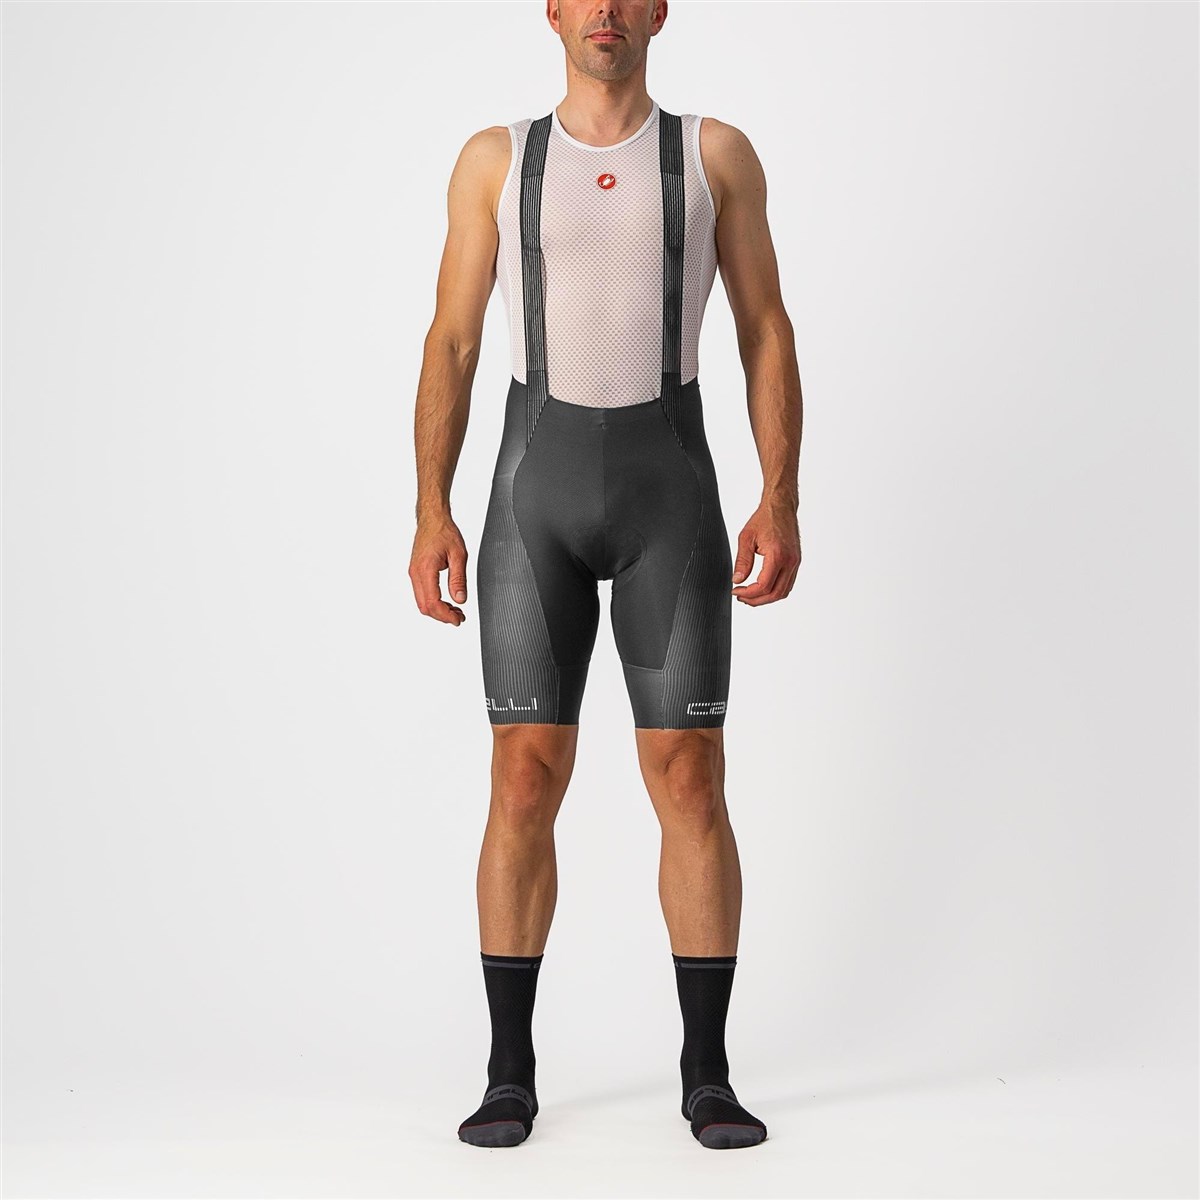 Castelli Free Aero RC Pro Cycling Bib Shorts product image